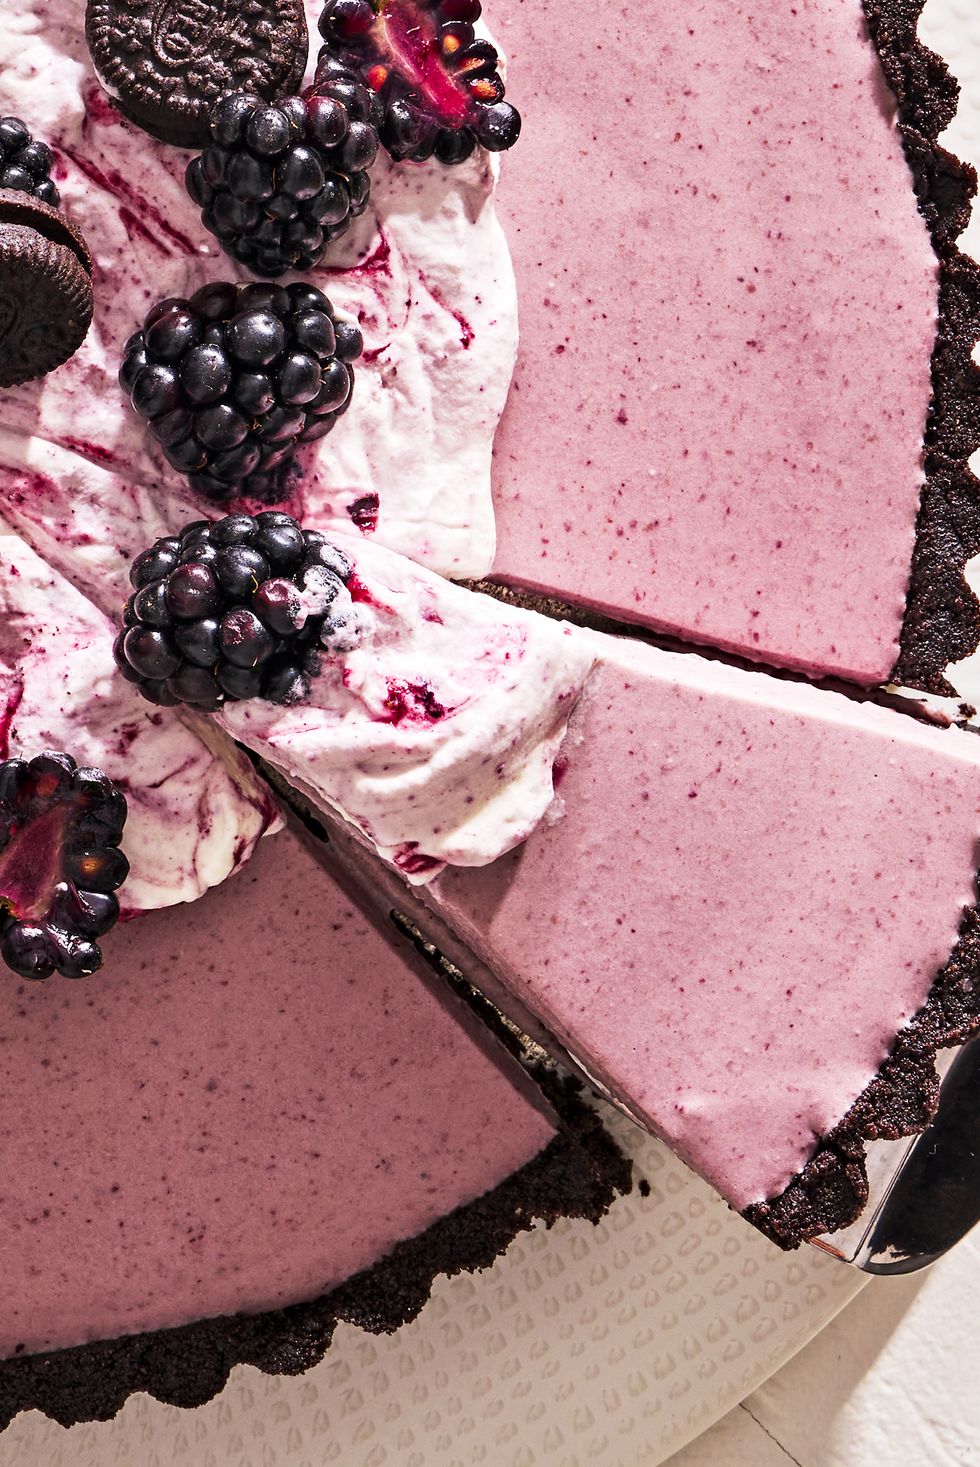 30 Best Berry Desserts - Easy Berry Dessert Recipes